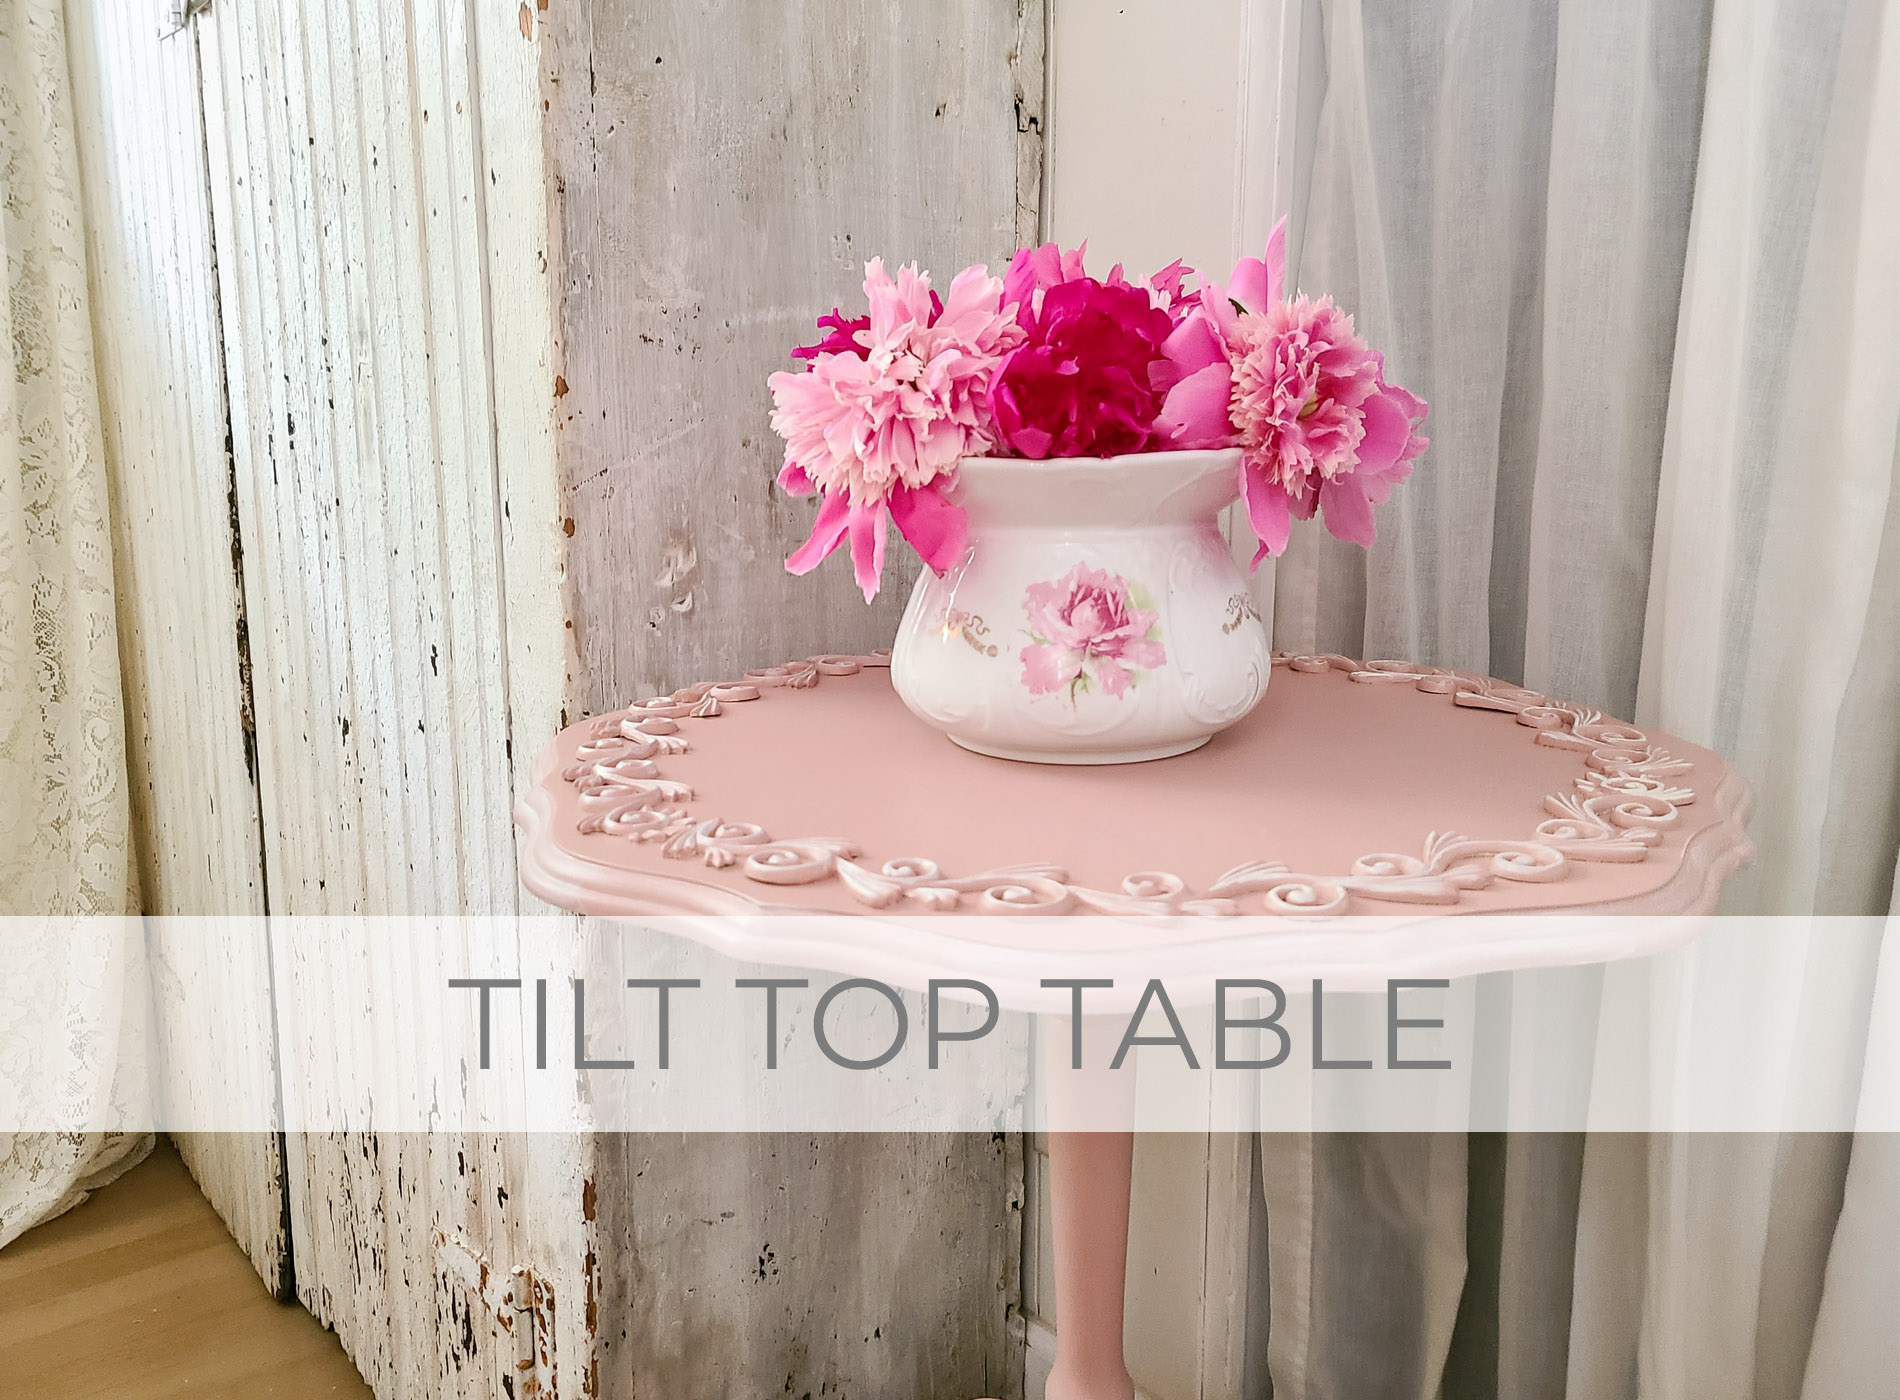 Tilt Top Table Makeover by Prodigal Pieces | prodigalpieces.com